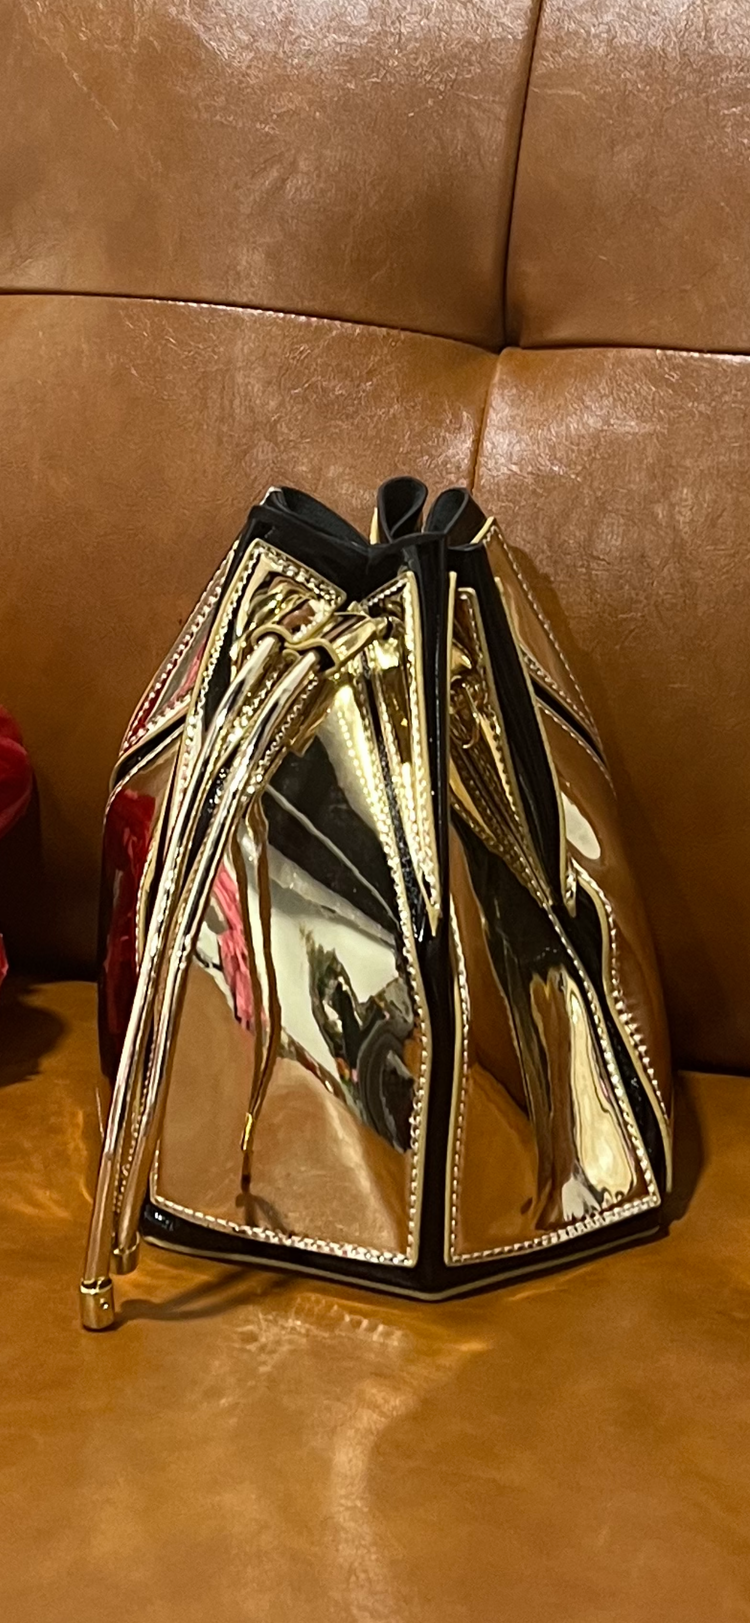 Mirrored Handbag Gold